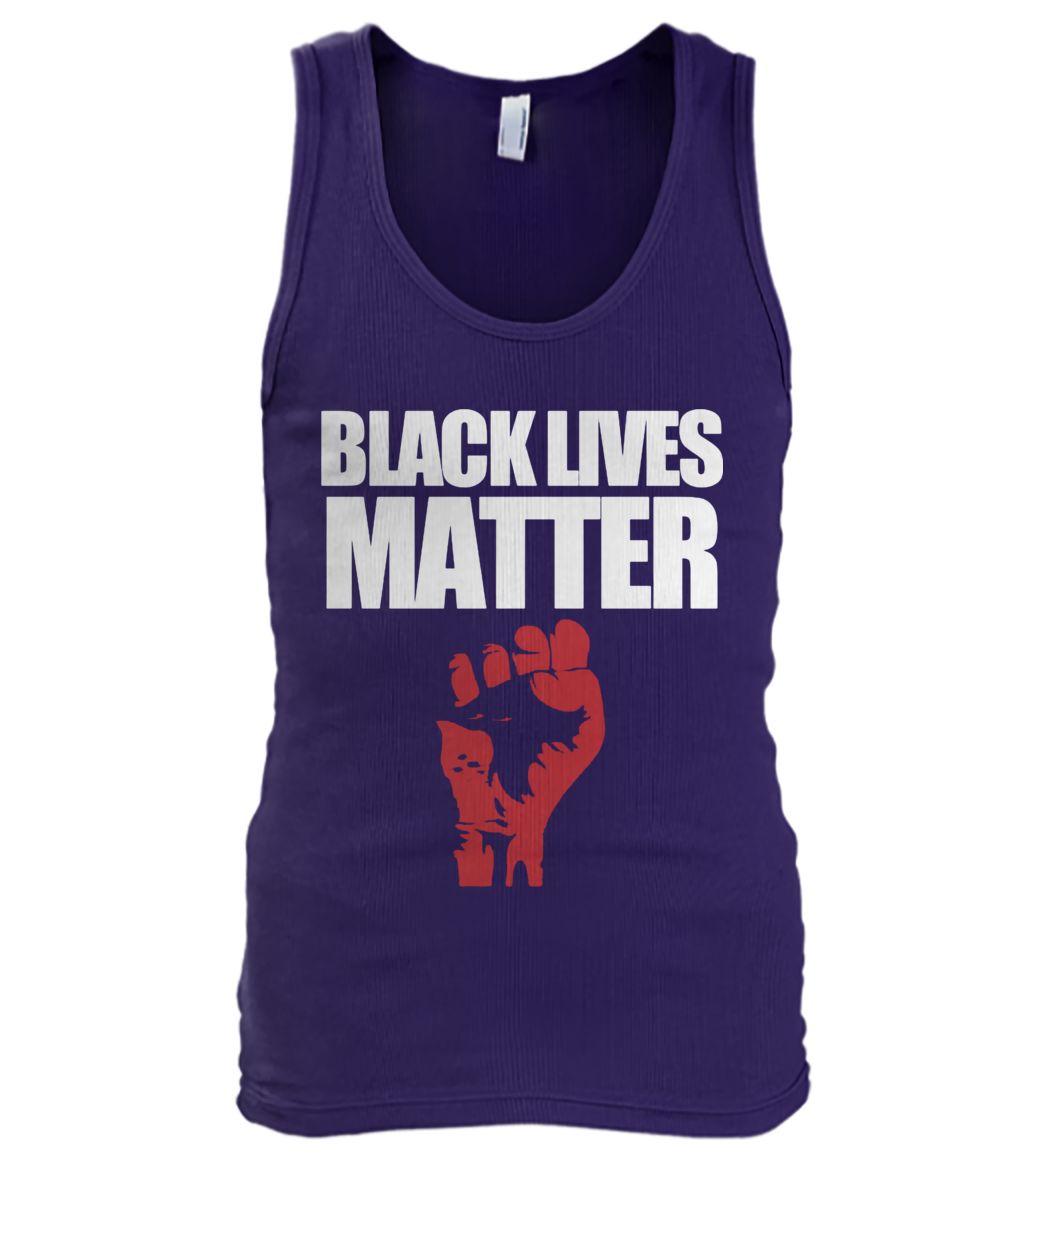 Black lives matter revolution movement men's tank top